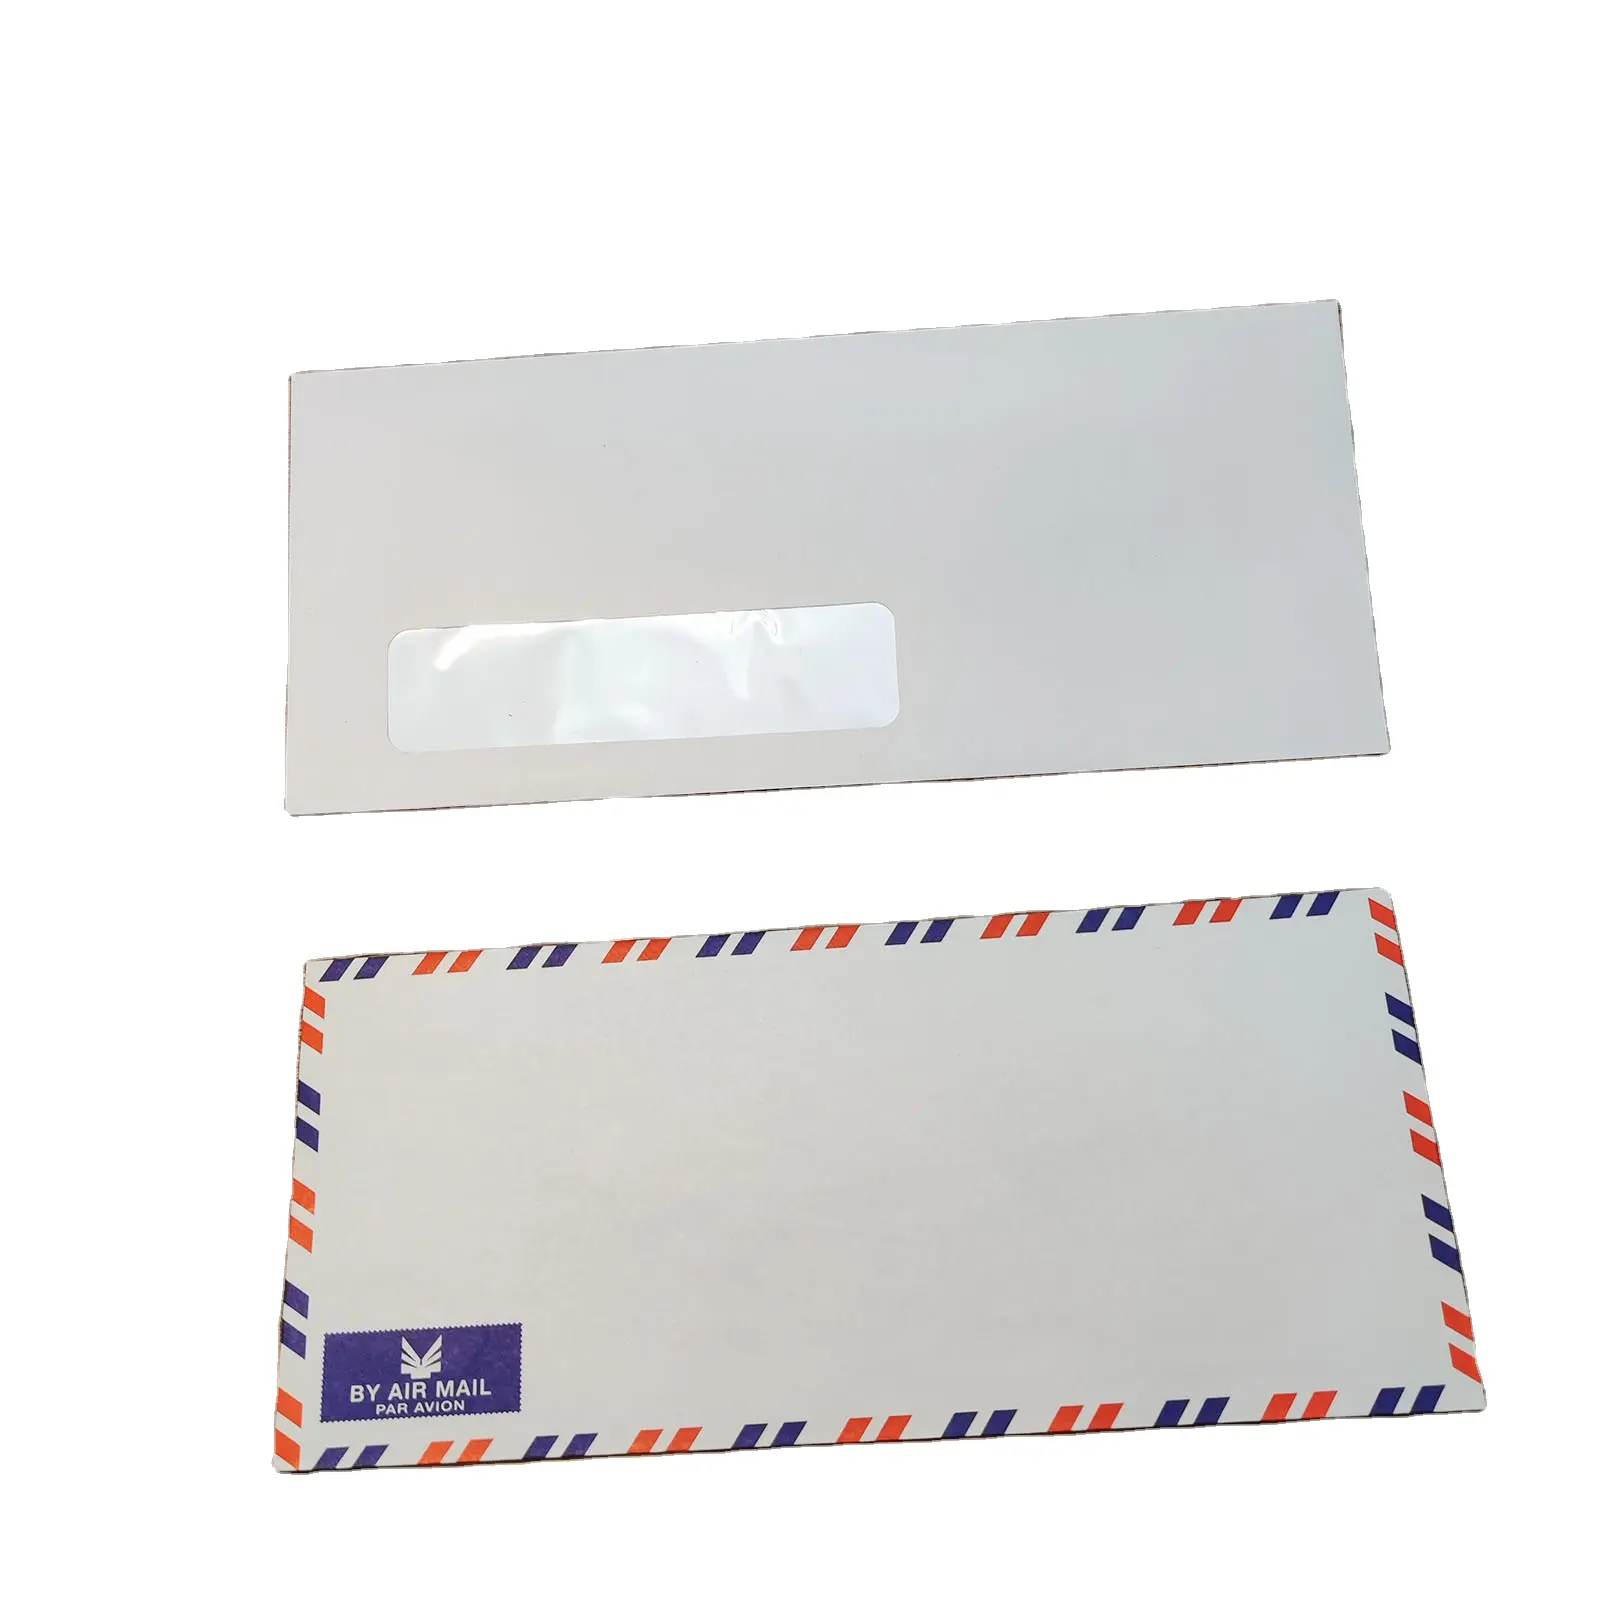 Rts vente en gros, enveloppe de courrier Express, papier blanc, enveloppes de courrier avec fenêtre transparente